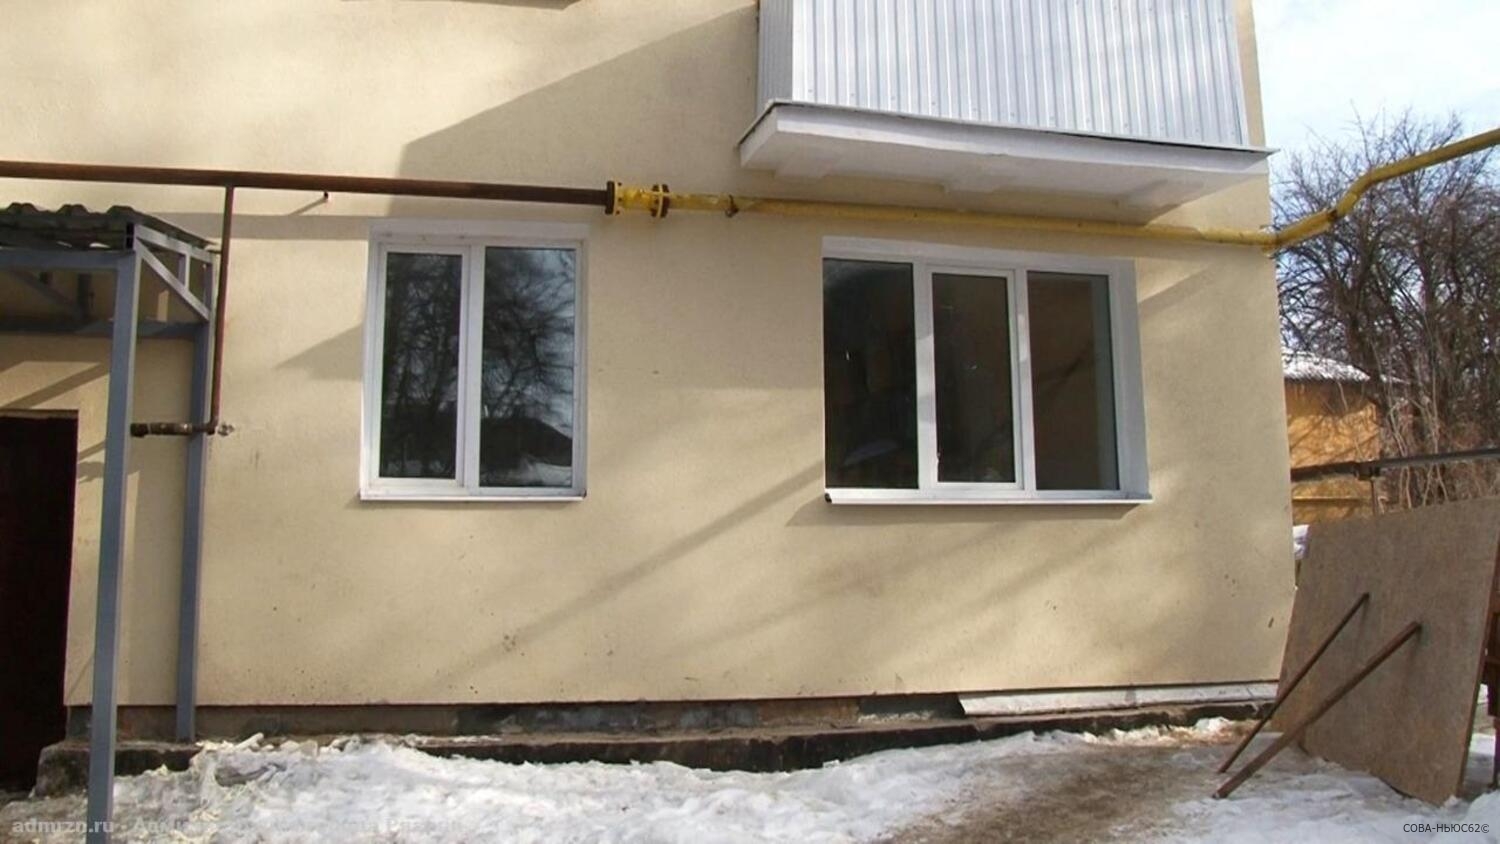 Разрушенный после взрыва дом на Пушкина в Рязани восстановили через год